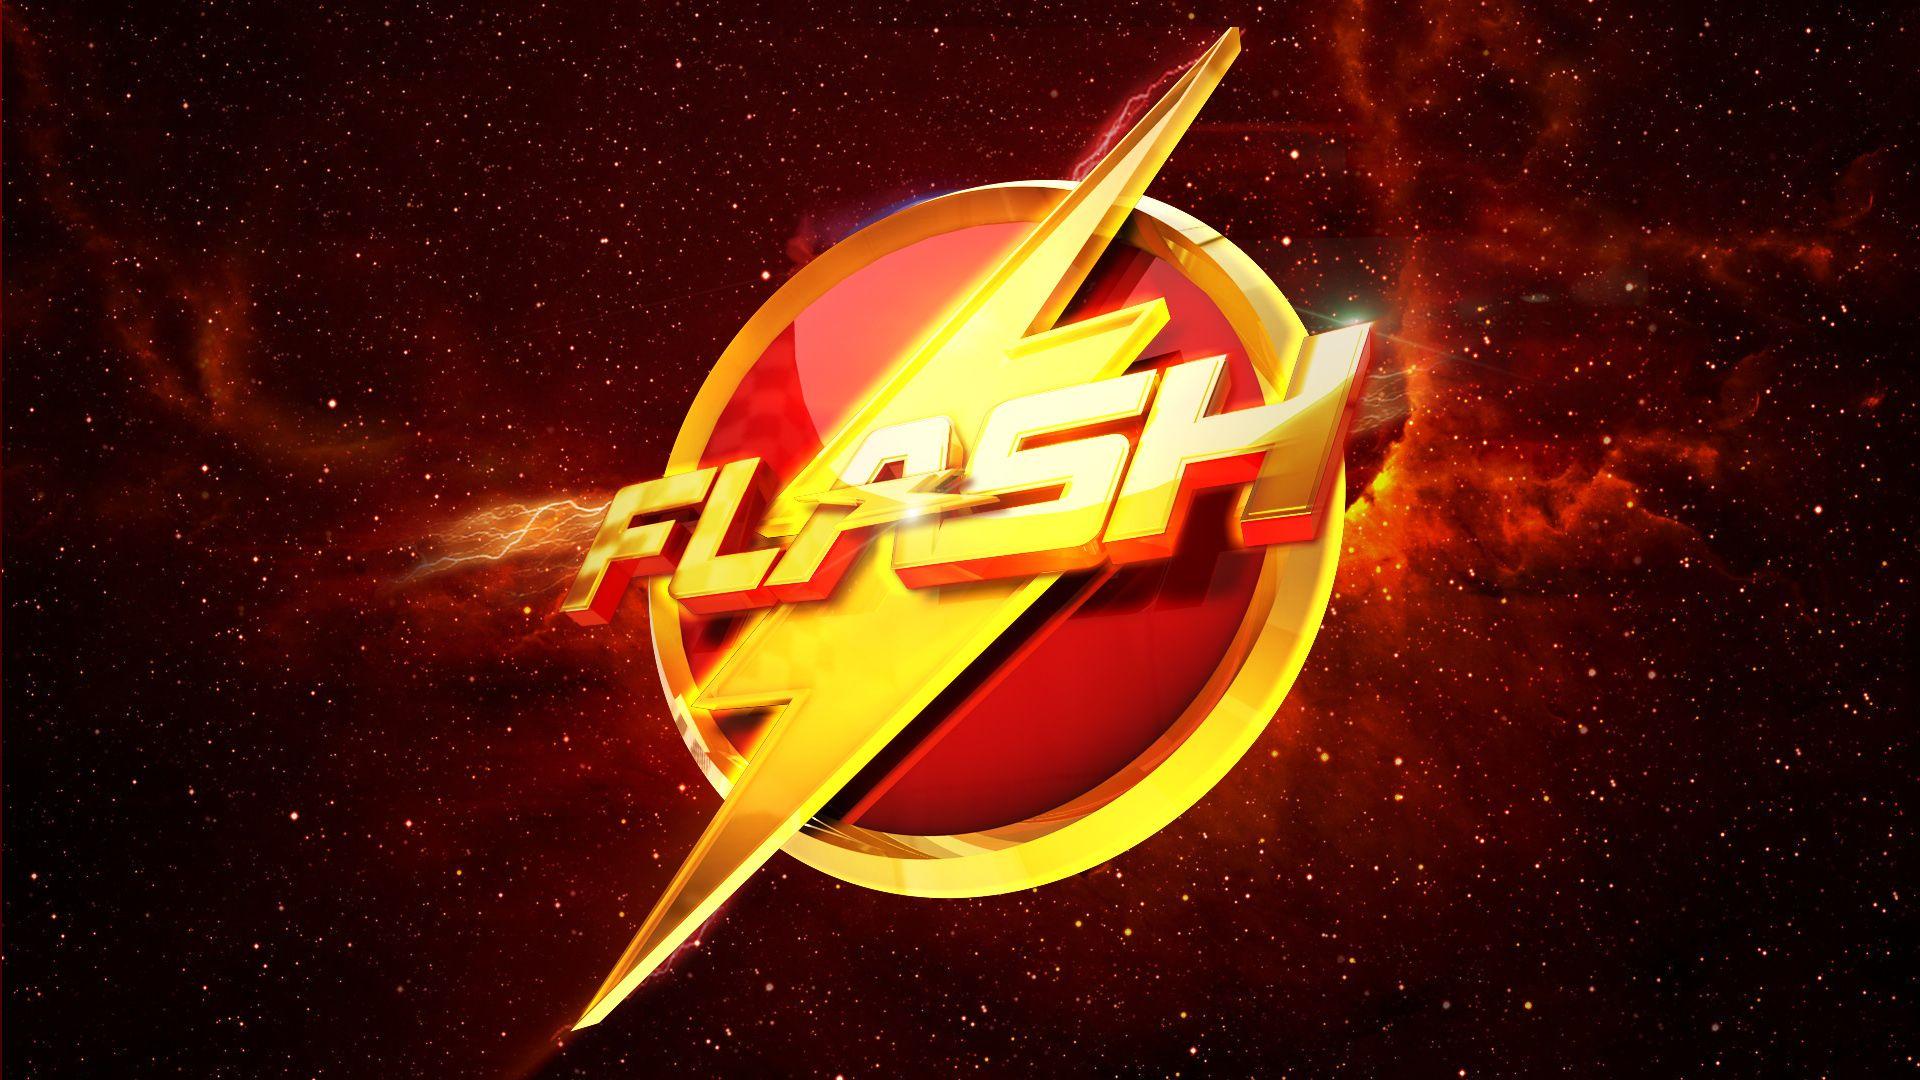 CW The Flash Wallpaper